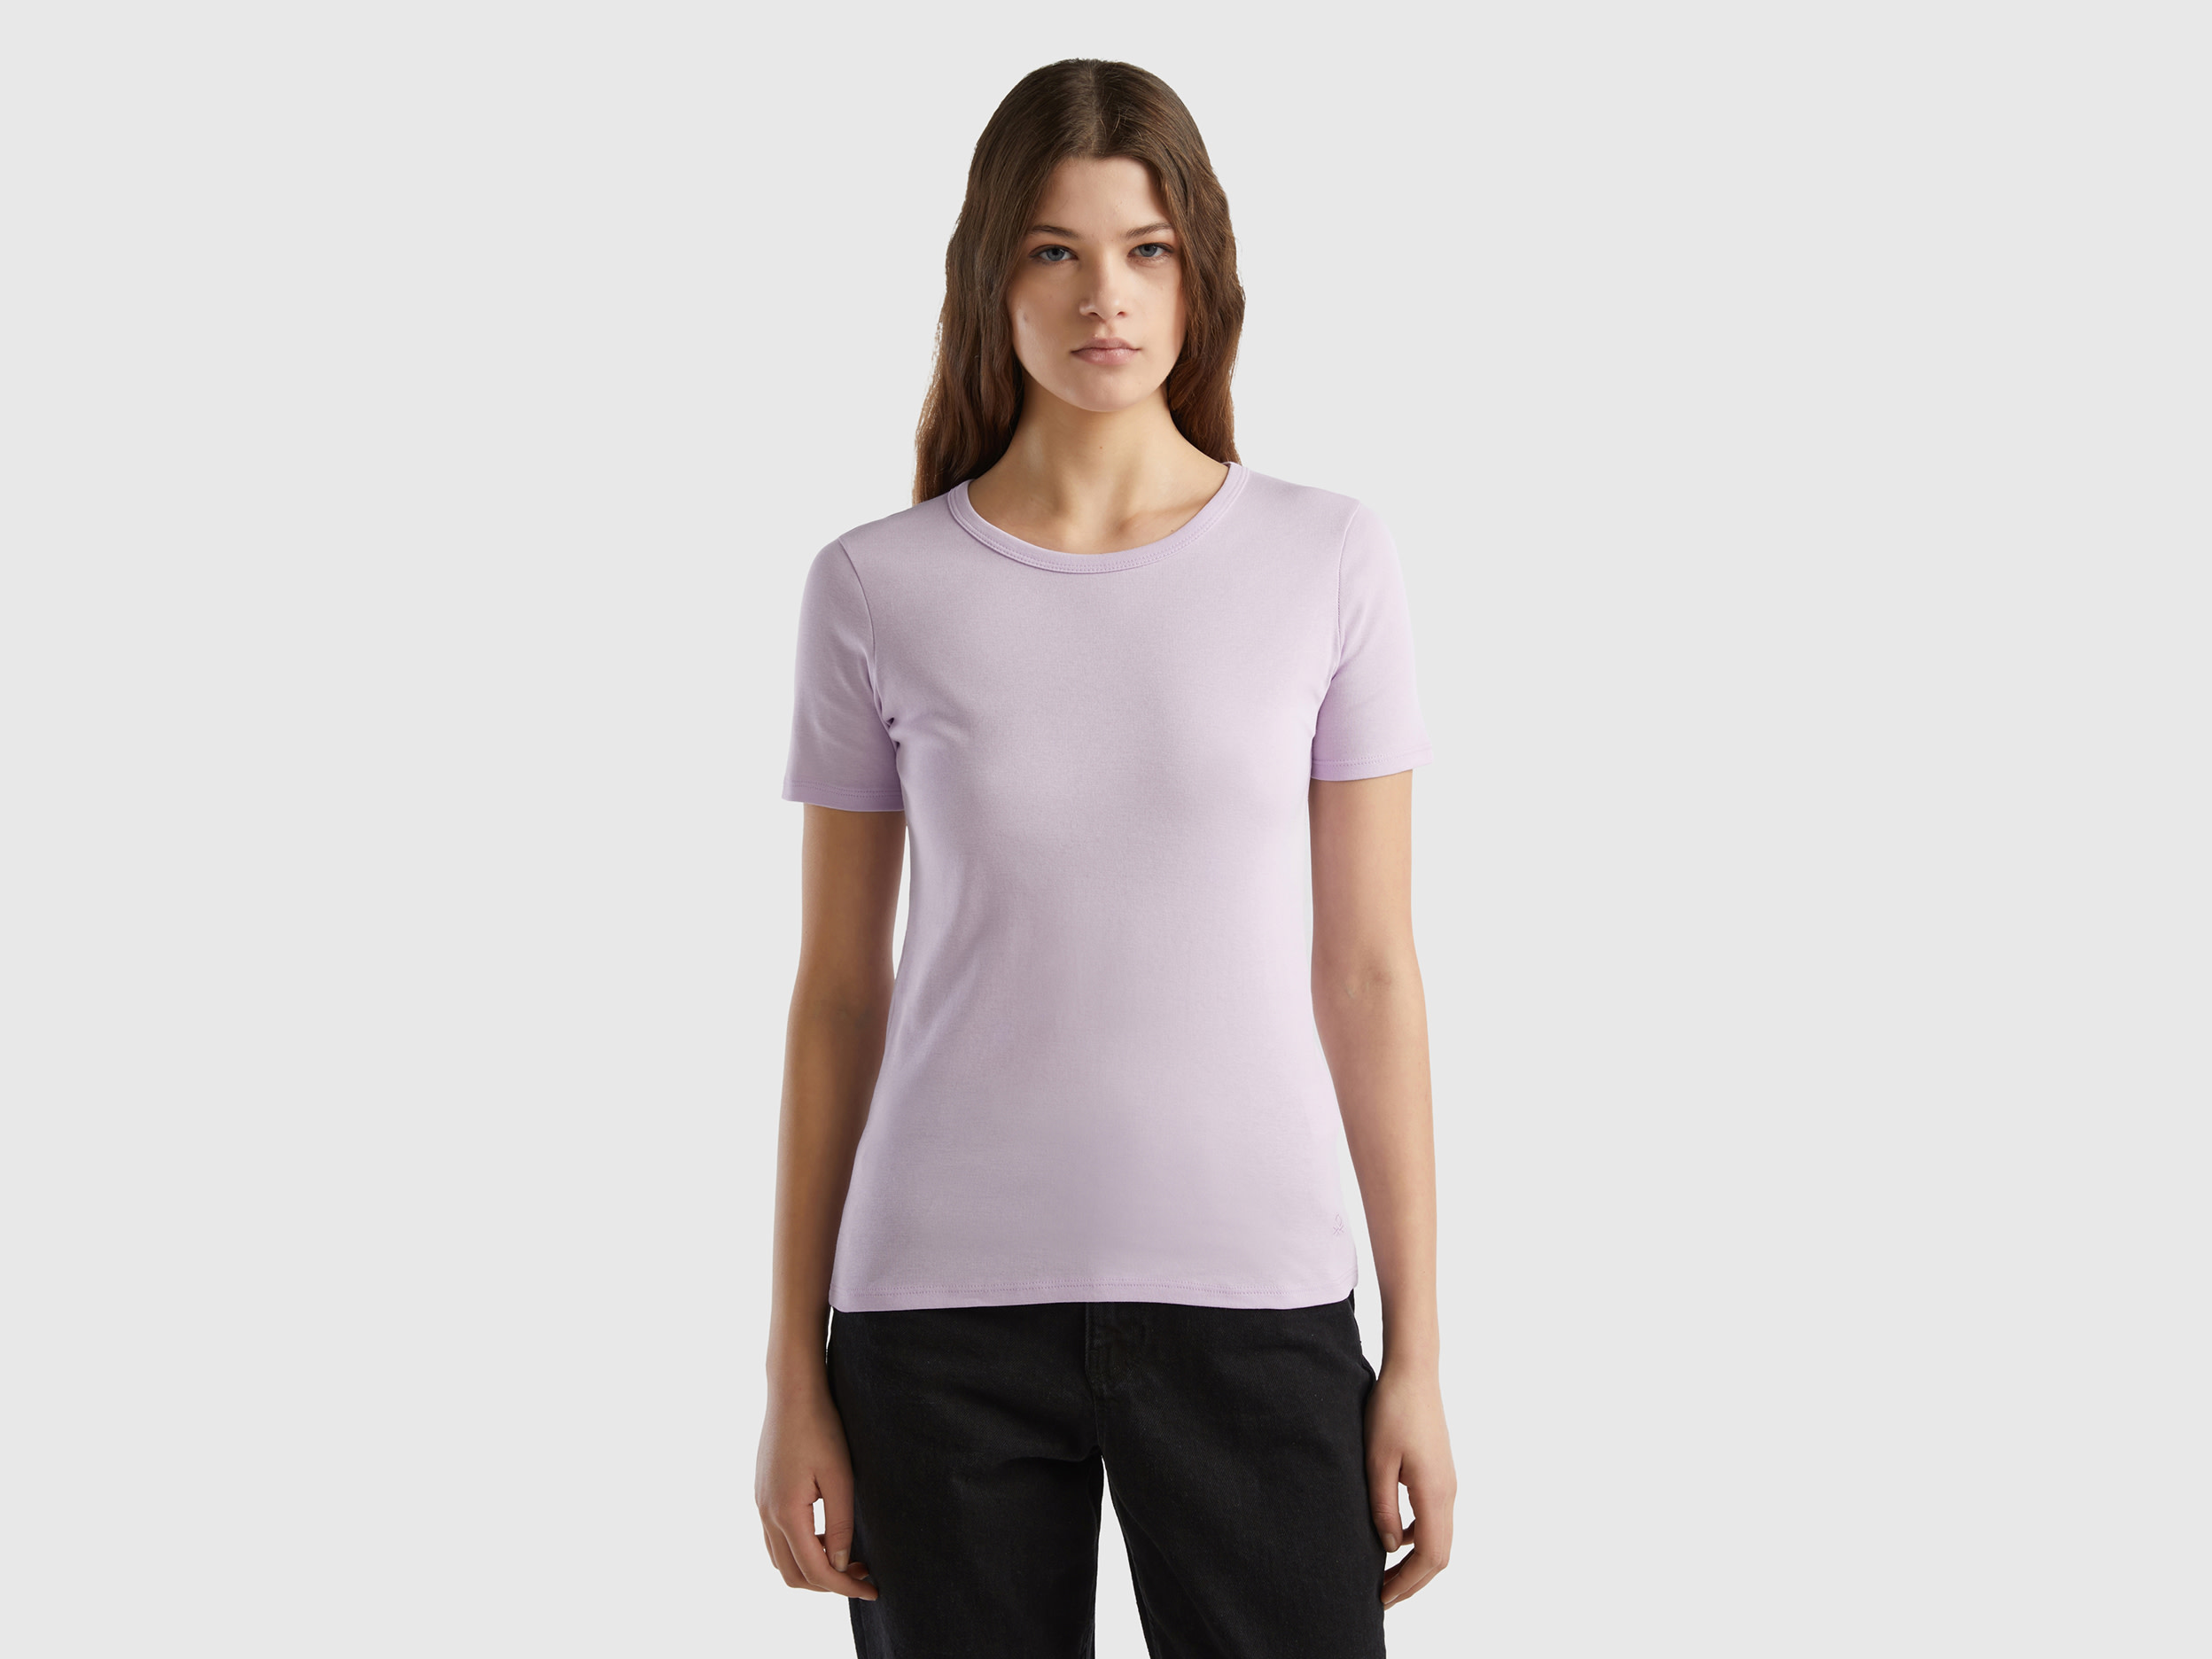 Benetton, Long Fiber Cotton T-shirt, size XXS, Lilac, Women